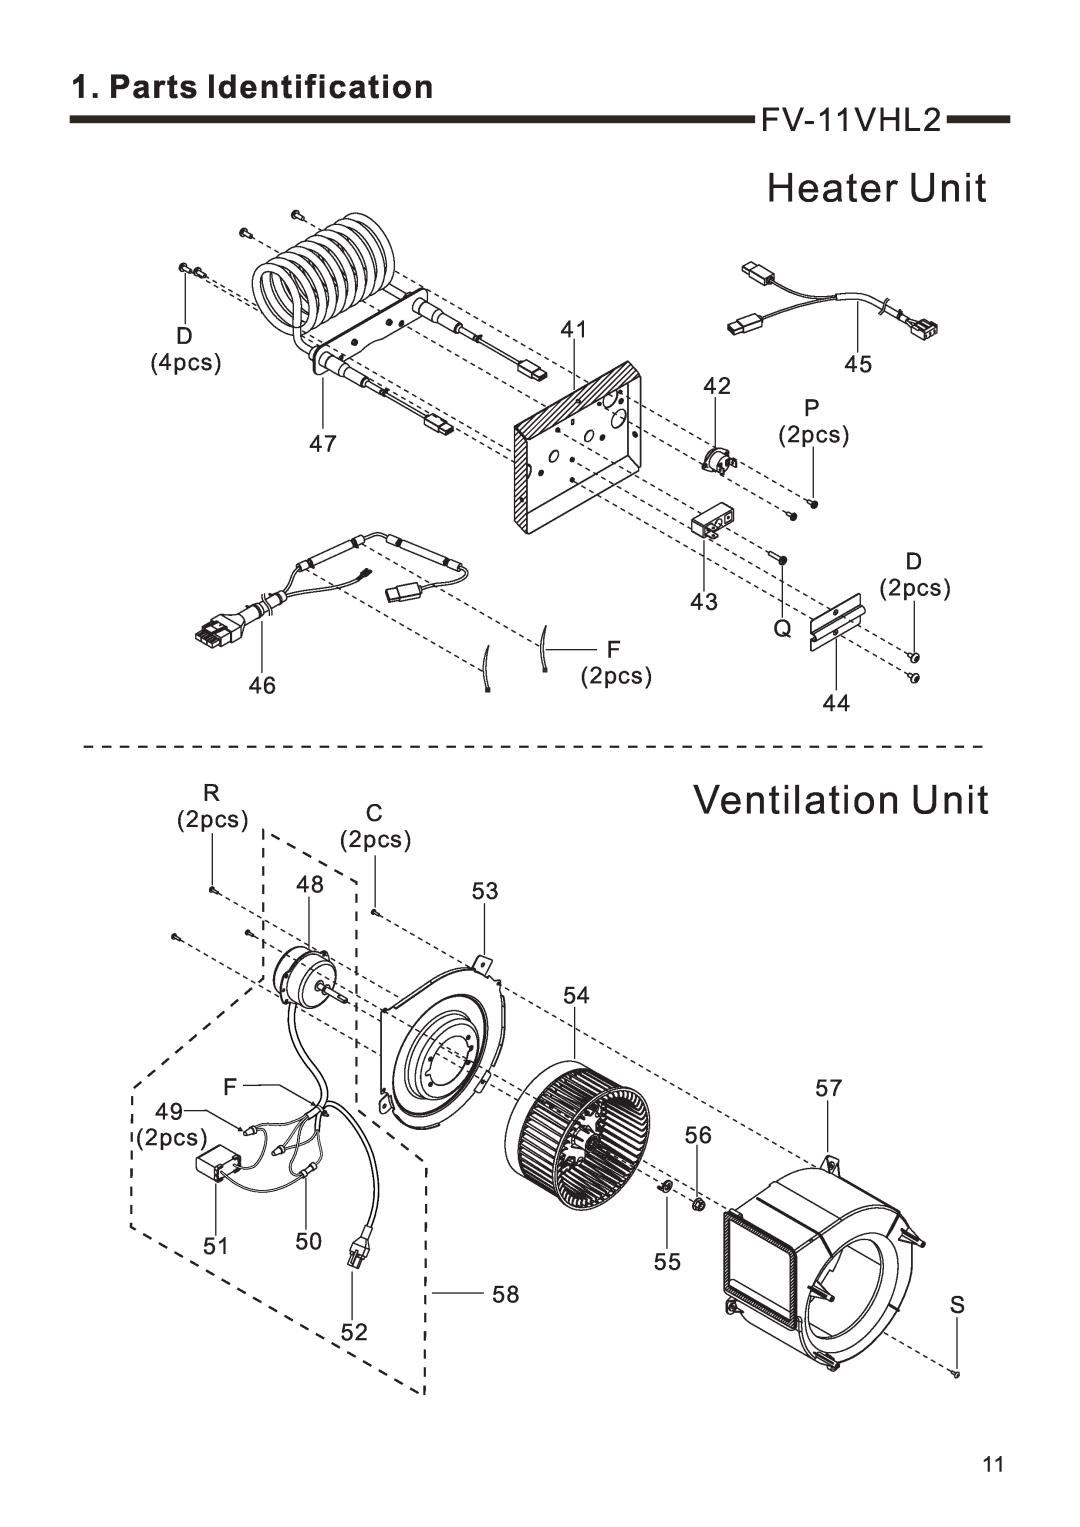 Panasonic FV-11VH2 service manual Heater Unit, Ventilation Unit, FV-11VHL2, 4pcs, 2pcs 